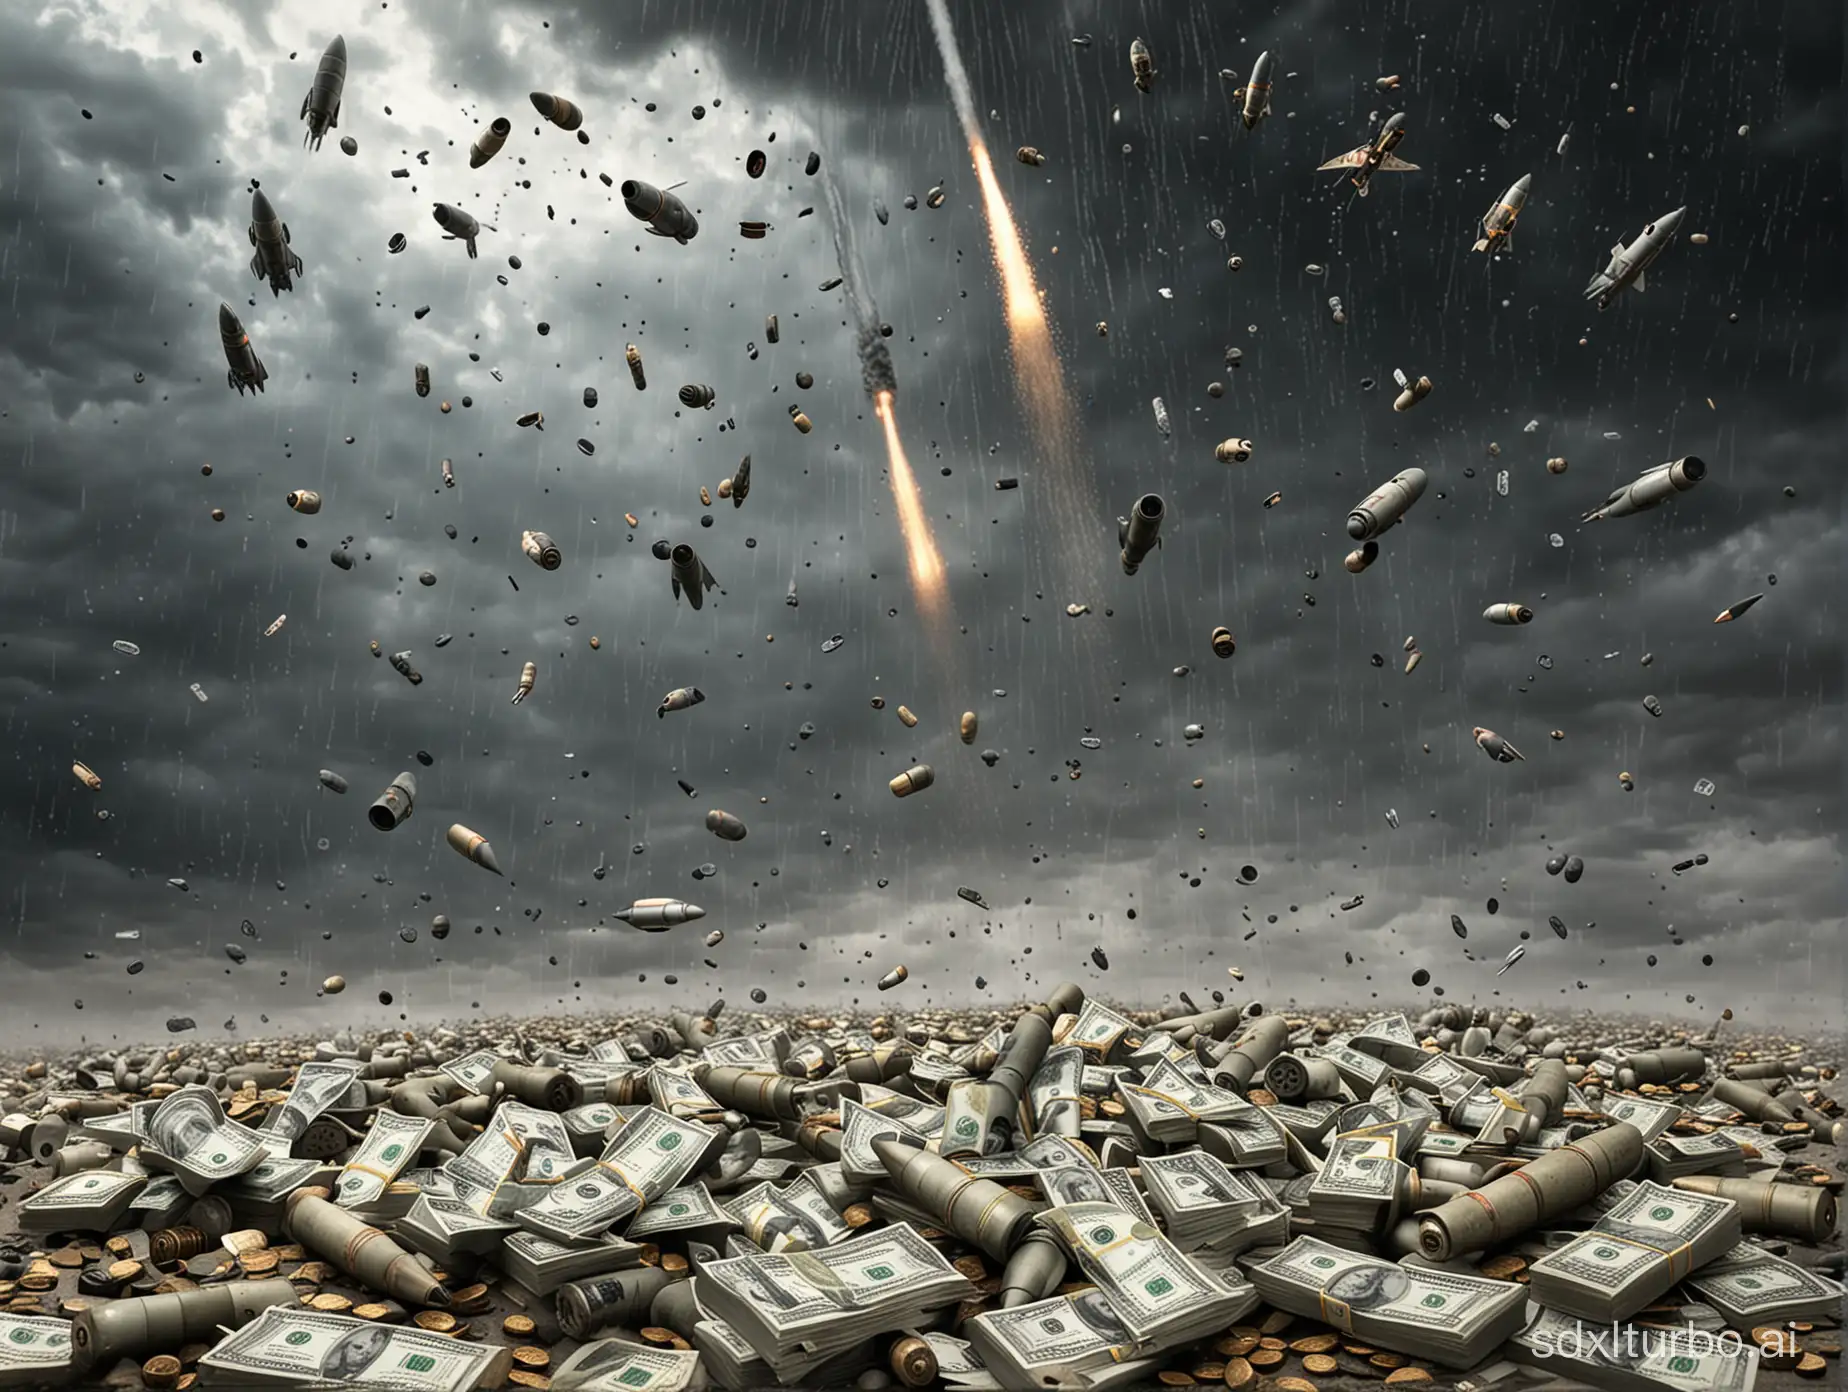 Economic-Destruction-Bombs-and-Rockets-Descending-on-Stacks-of-Money